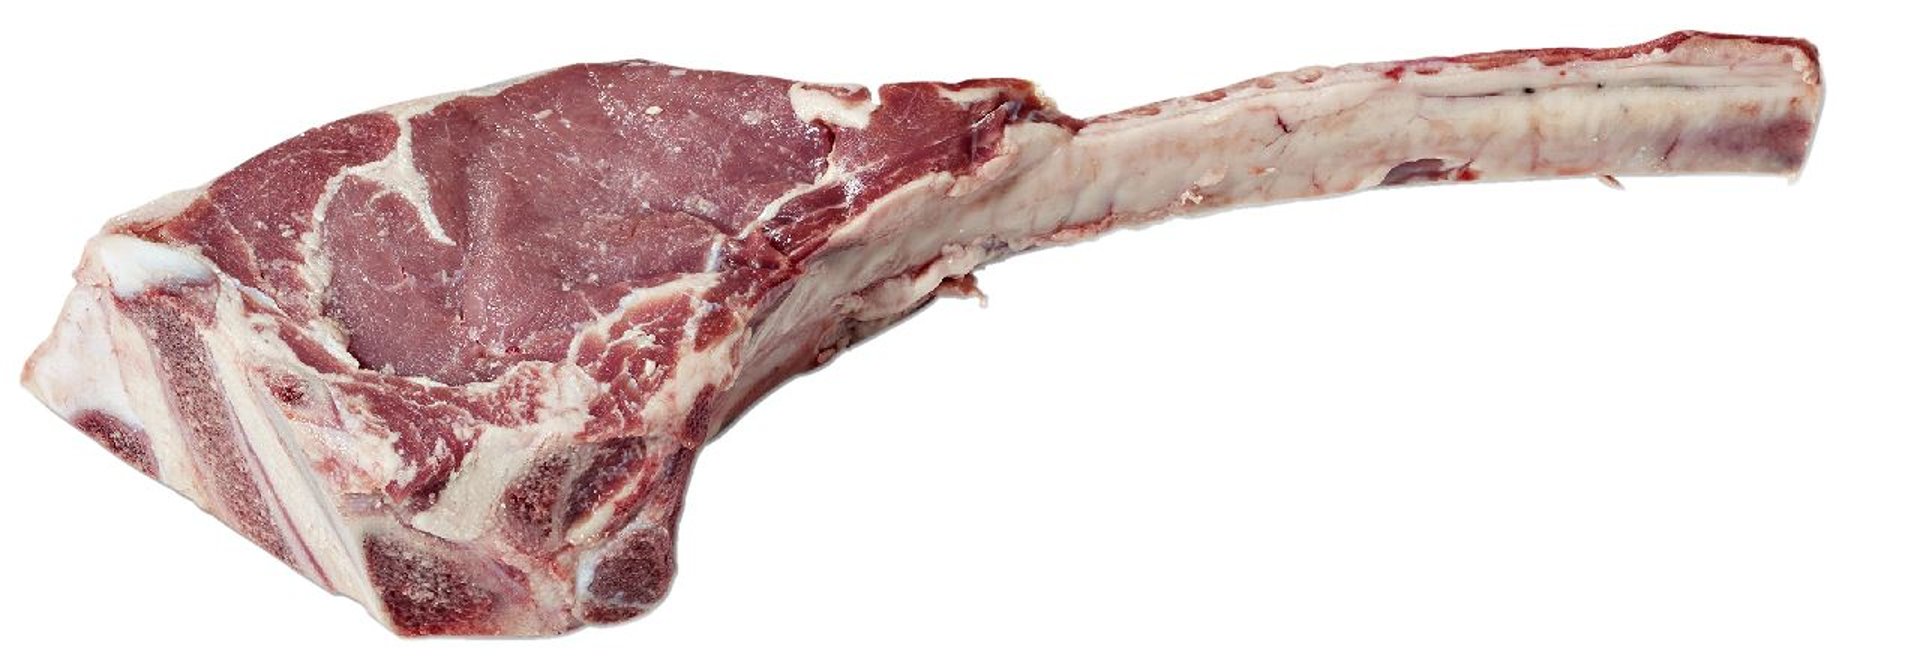 Muka - Dry Aged Kalbs-Tomahawk Steak 21 Tage gereift, vak.-verpackt ca. 1 kg